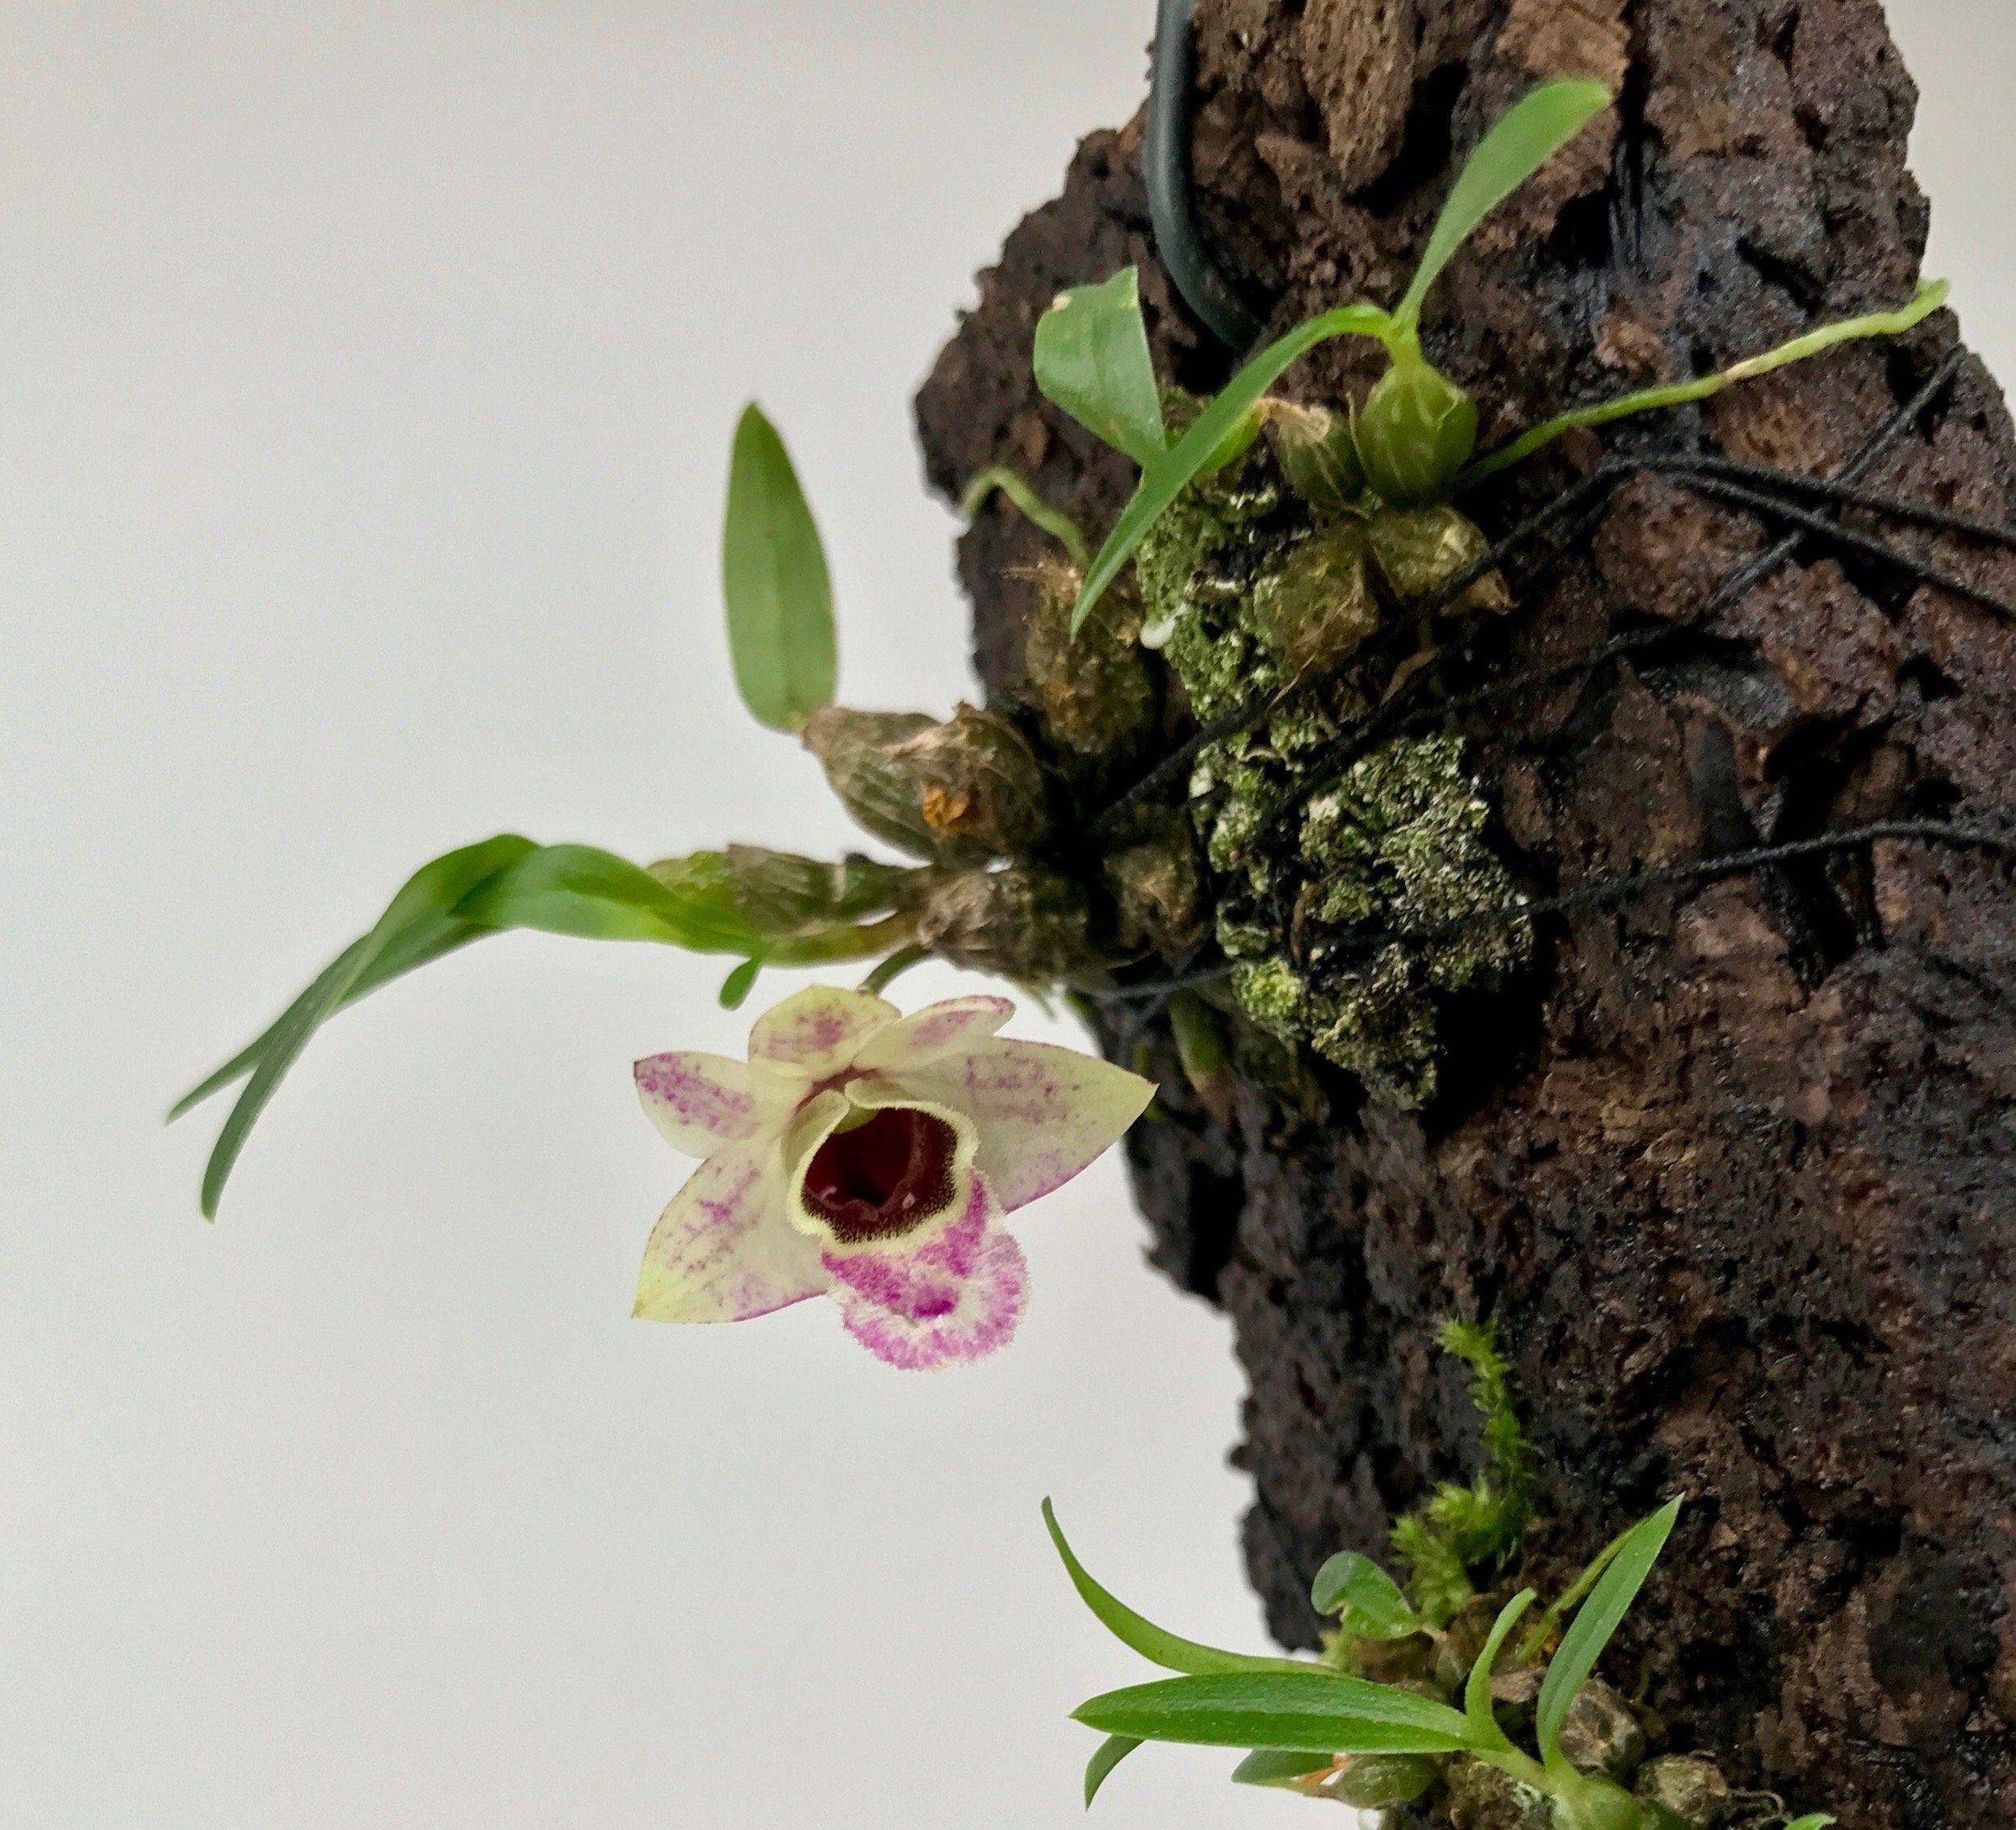 Dendrobium hekouense "Big Plant"